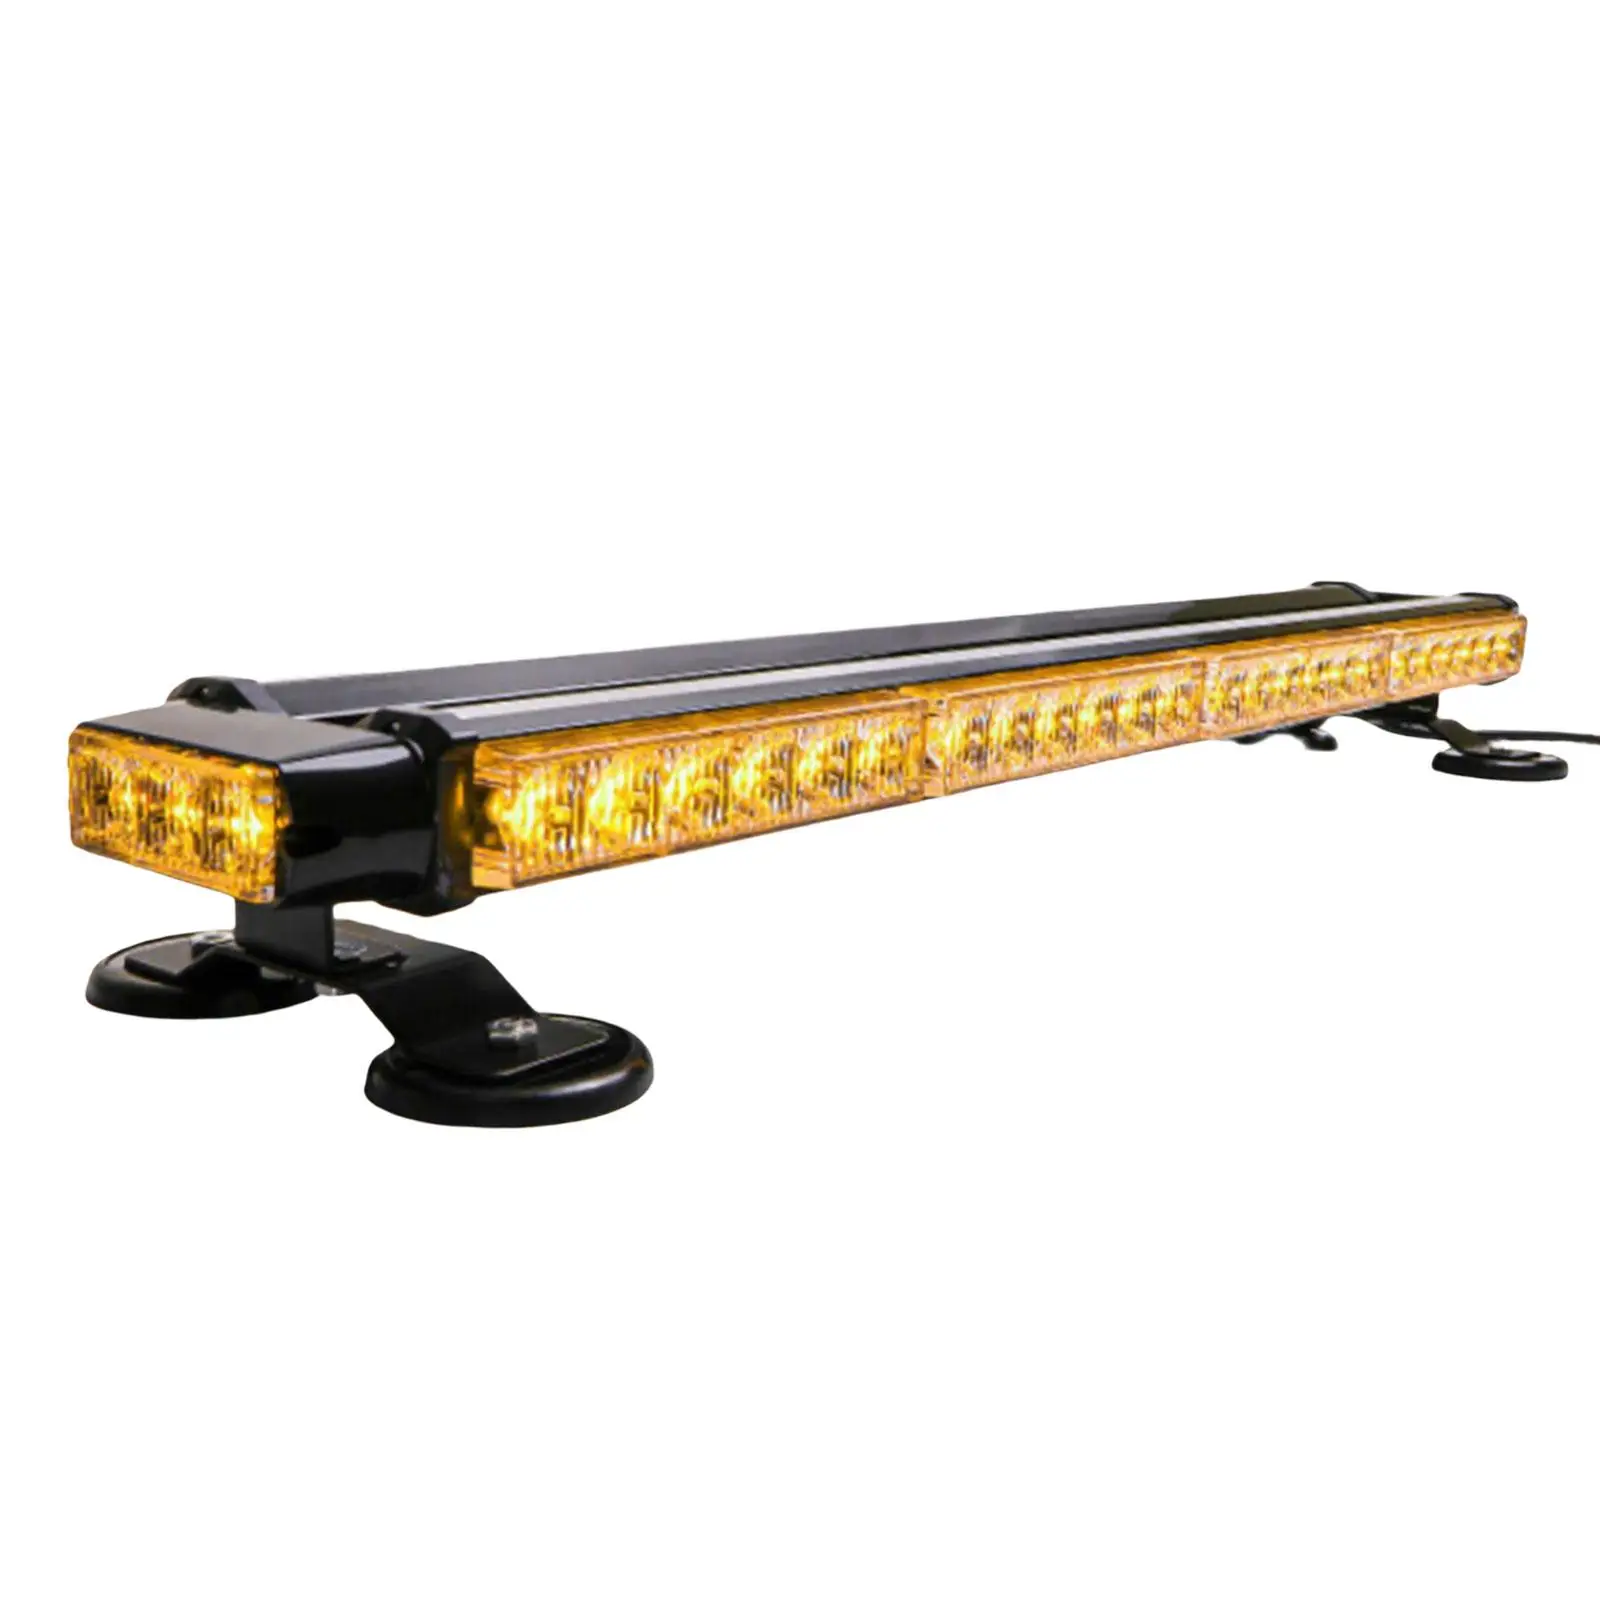 54 LED Amber Vehicle Roof Top Emergency Flashing Warning Strobe Light Bar Beacon, Easy Installation